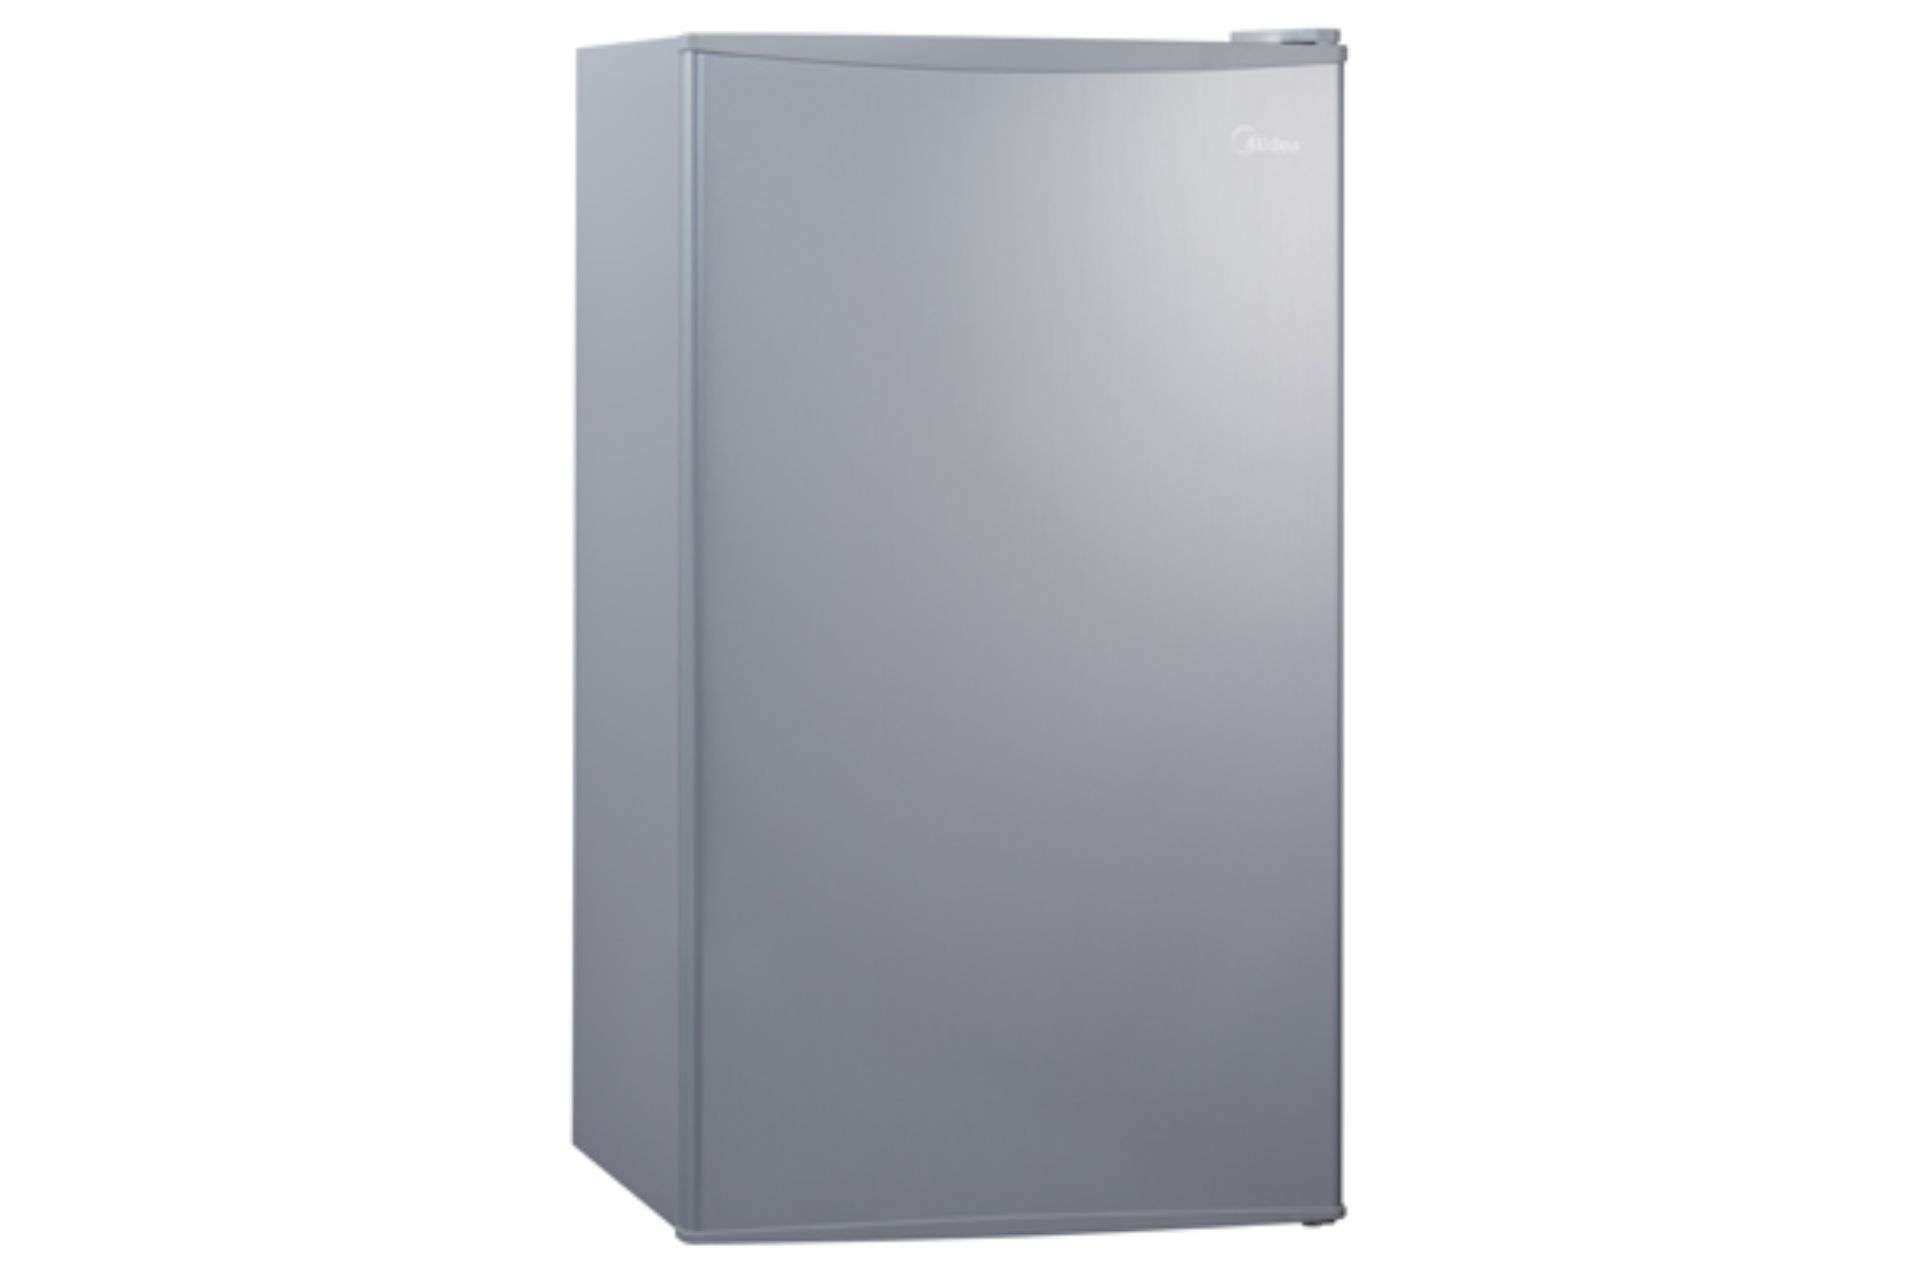 95L 1-Door Refrigerator